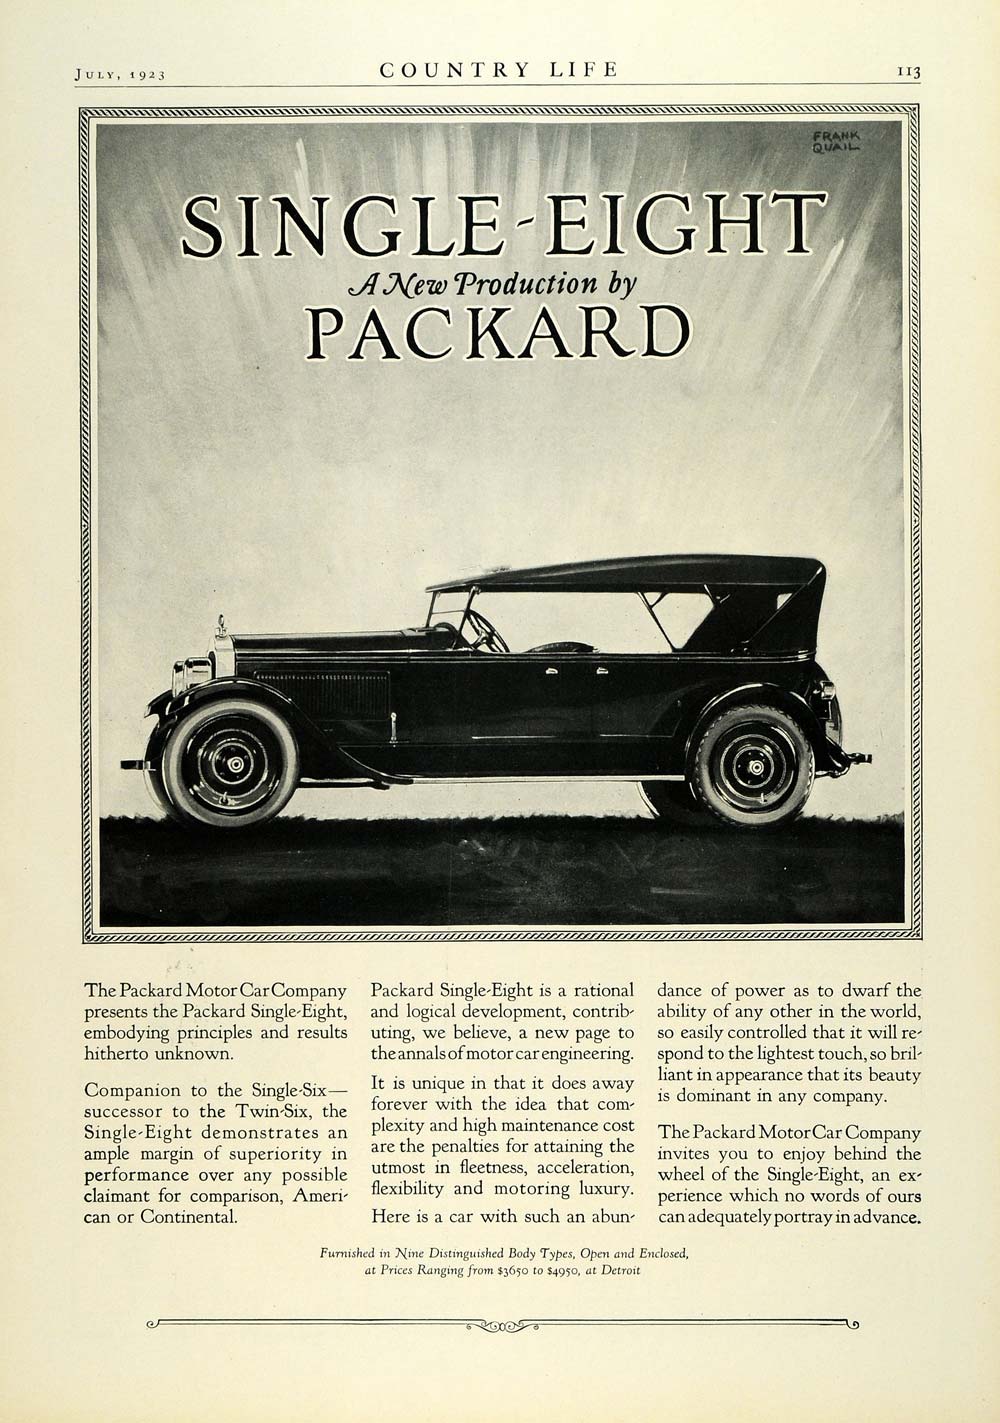 1923 Ad Packard Motor Car Co Single-Eight Automobile Vintage Car Frank COL3